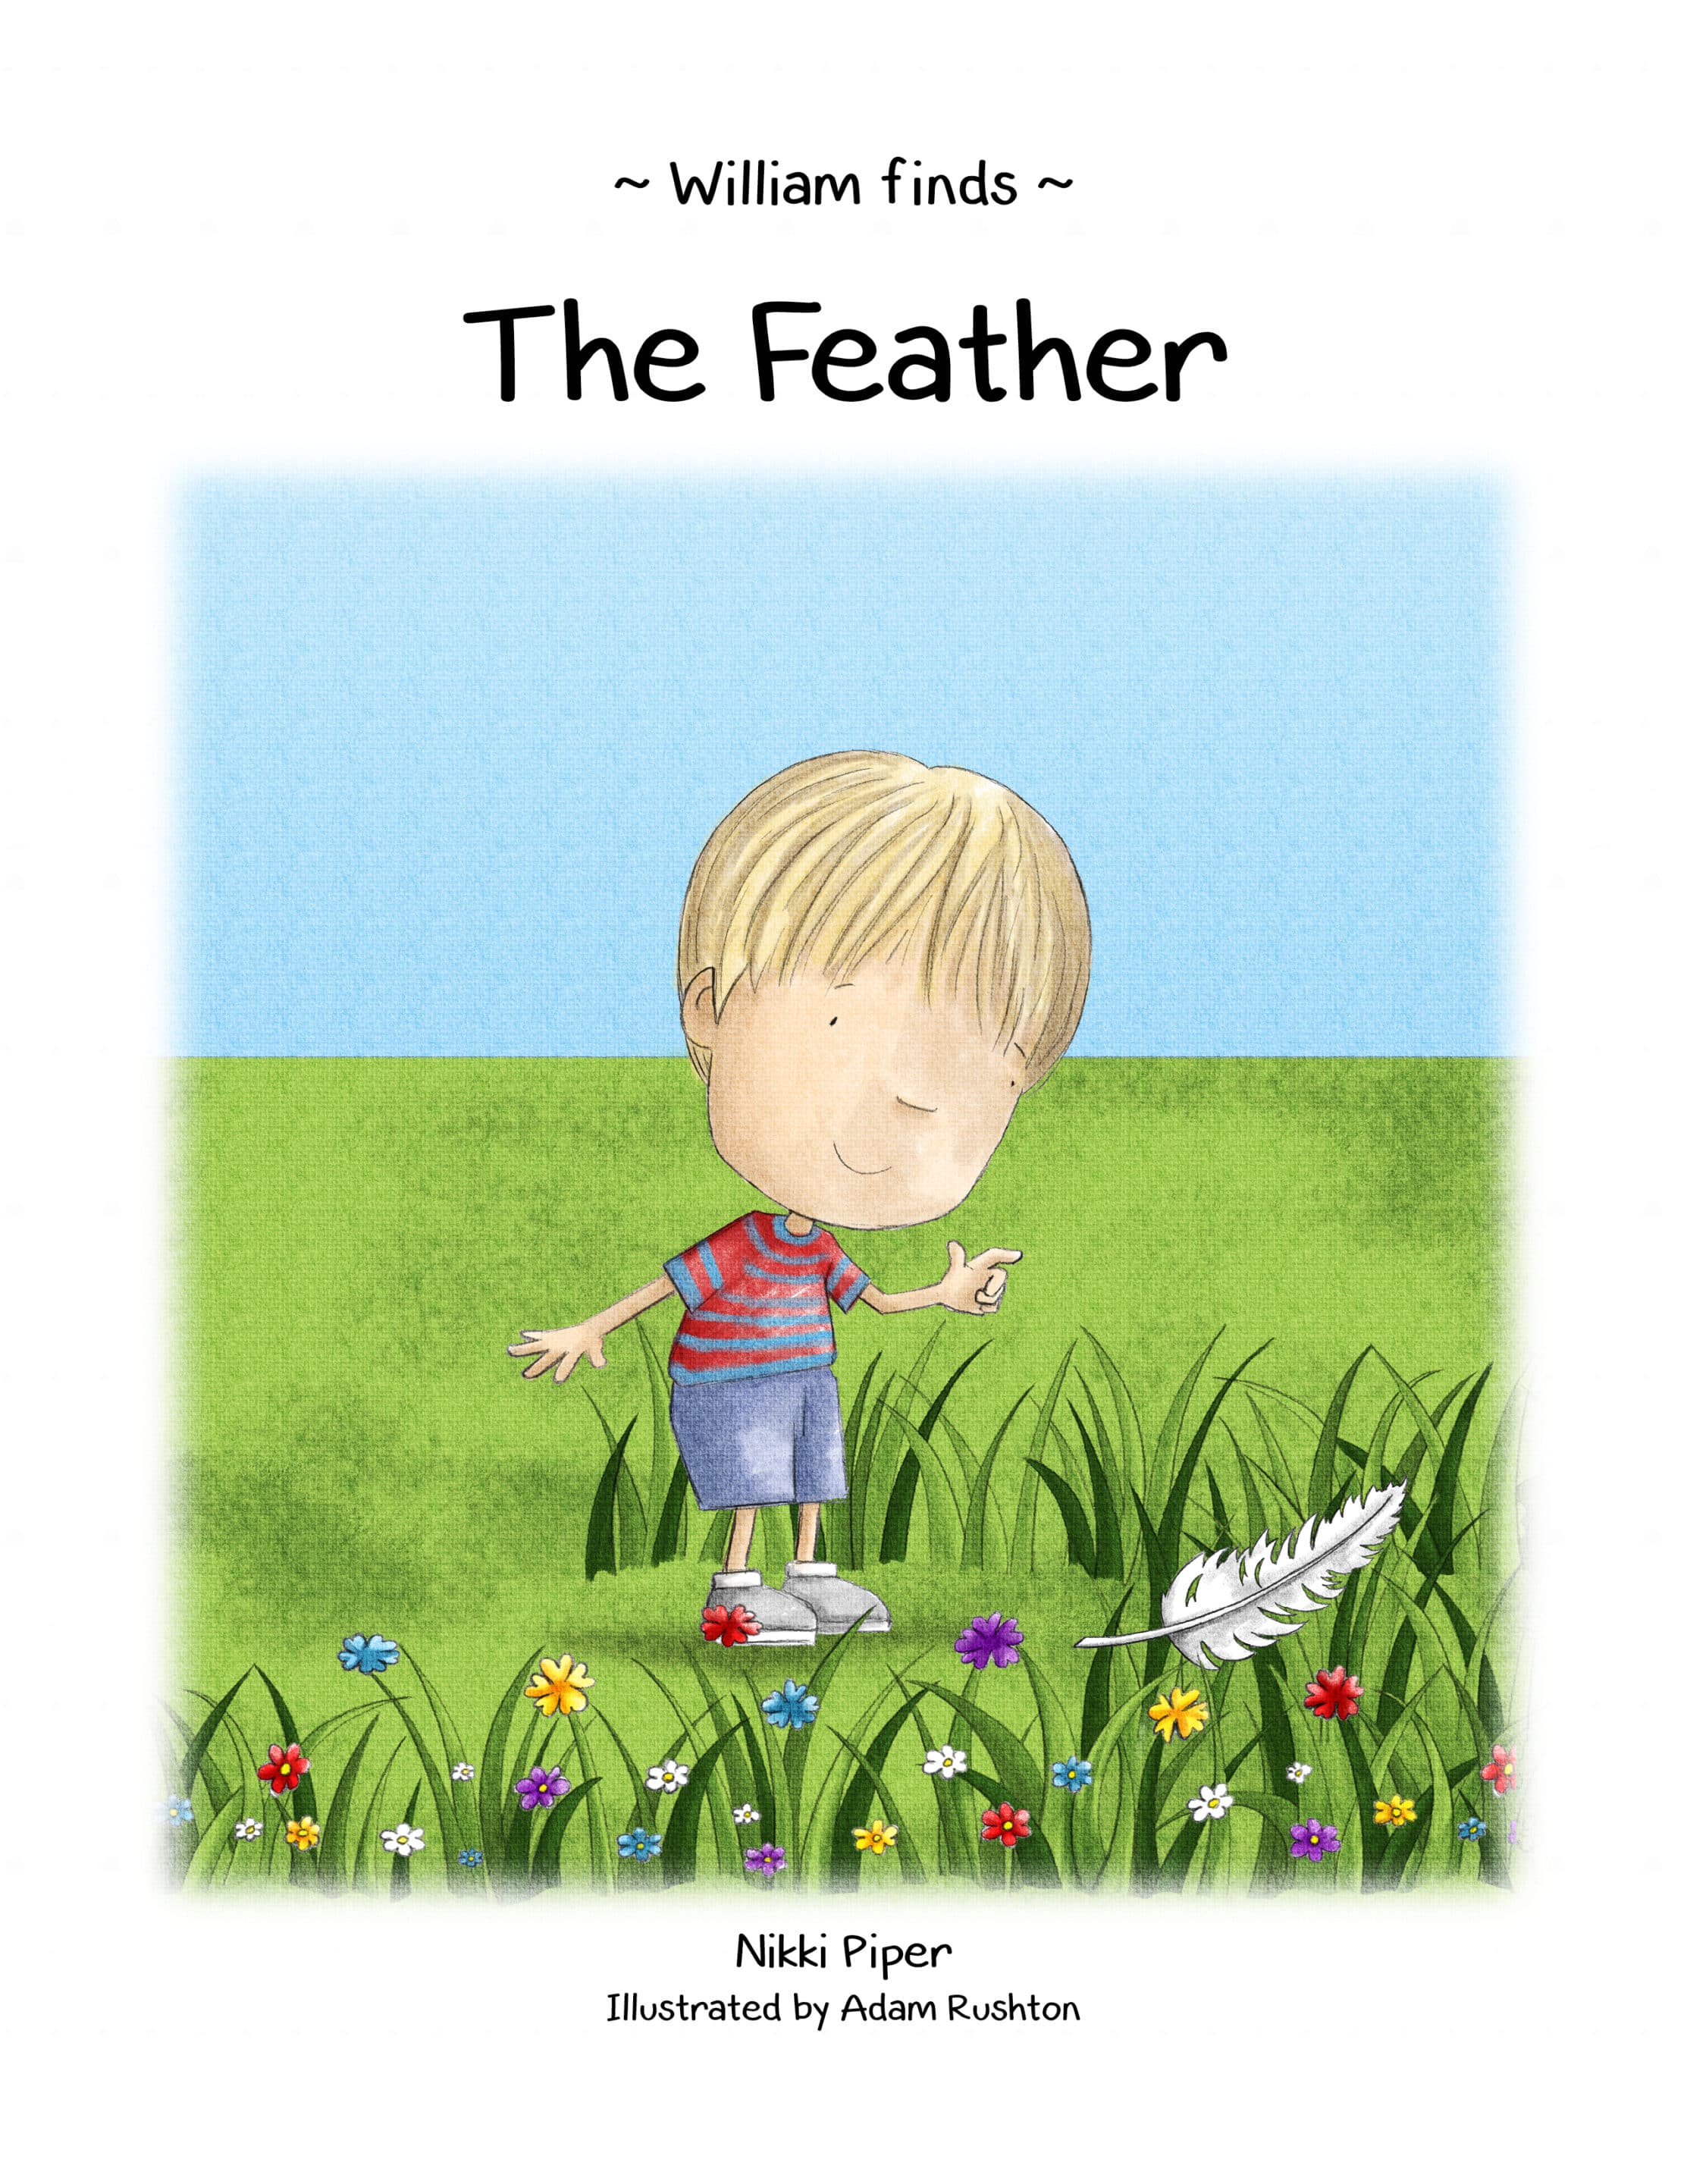 childrens book illustration